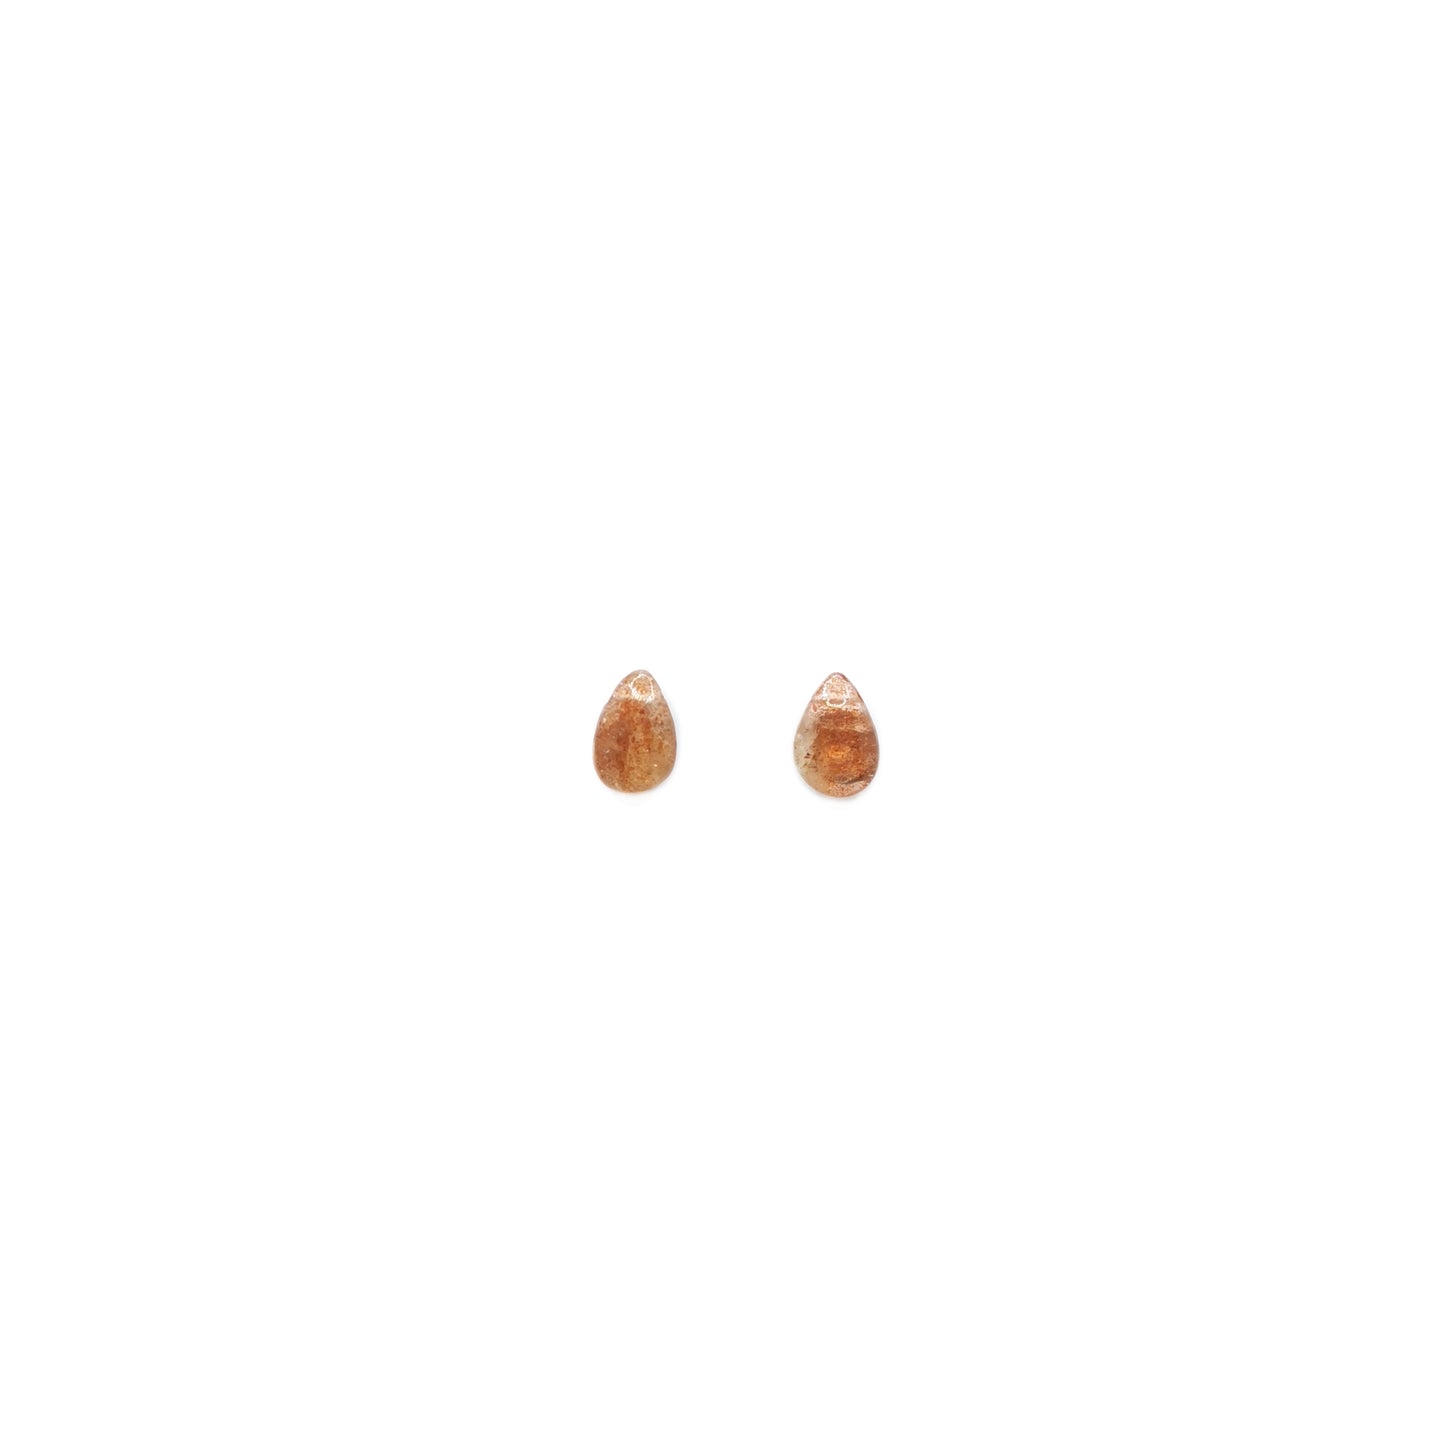 Sunstone Pear Shaped Face Stud Earrings